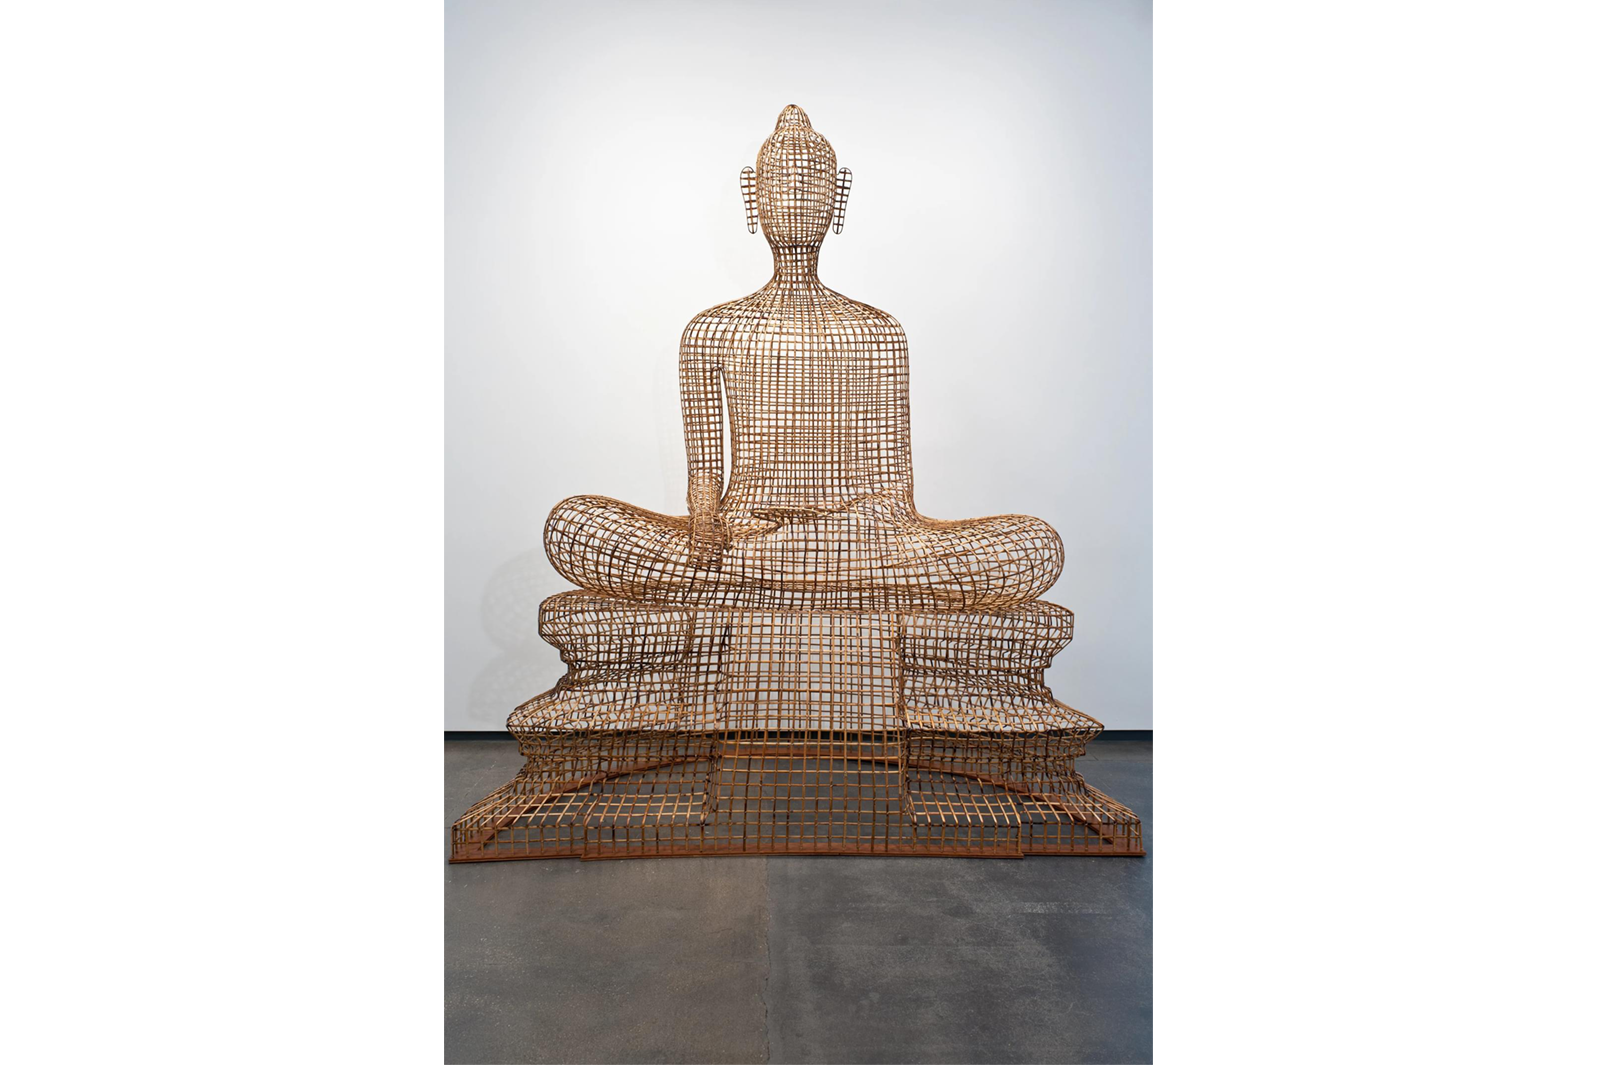 "Seated Buddha" by Sopheap Pich.